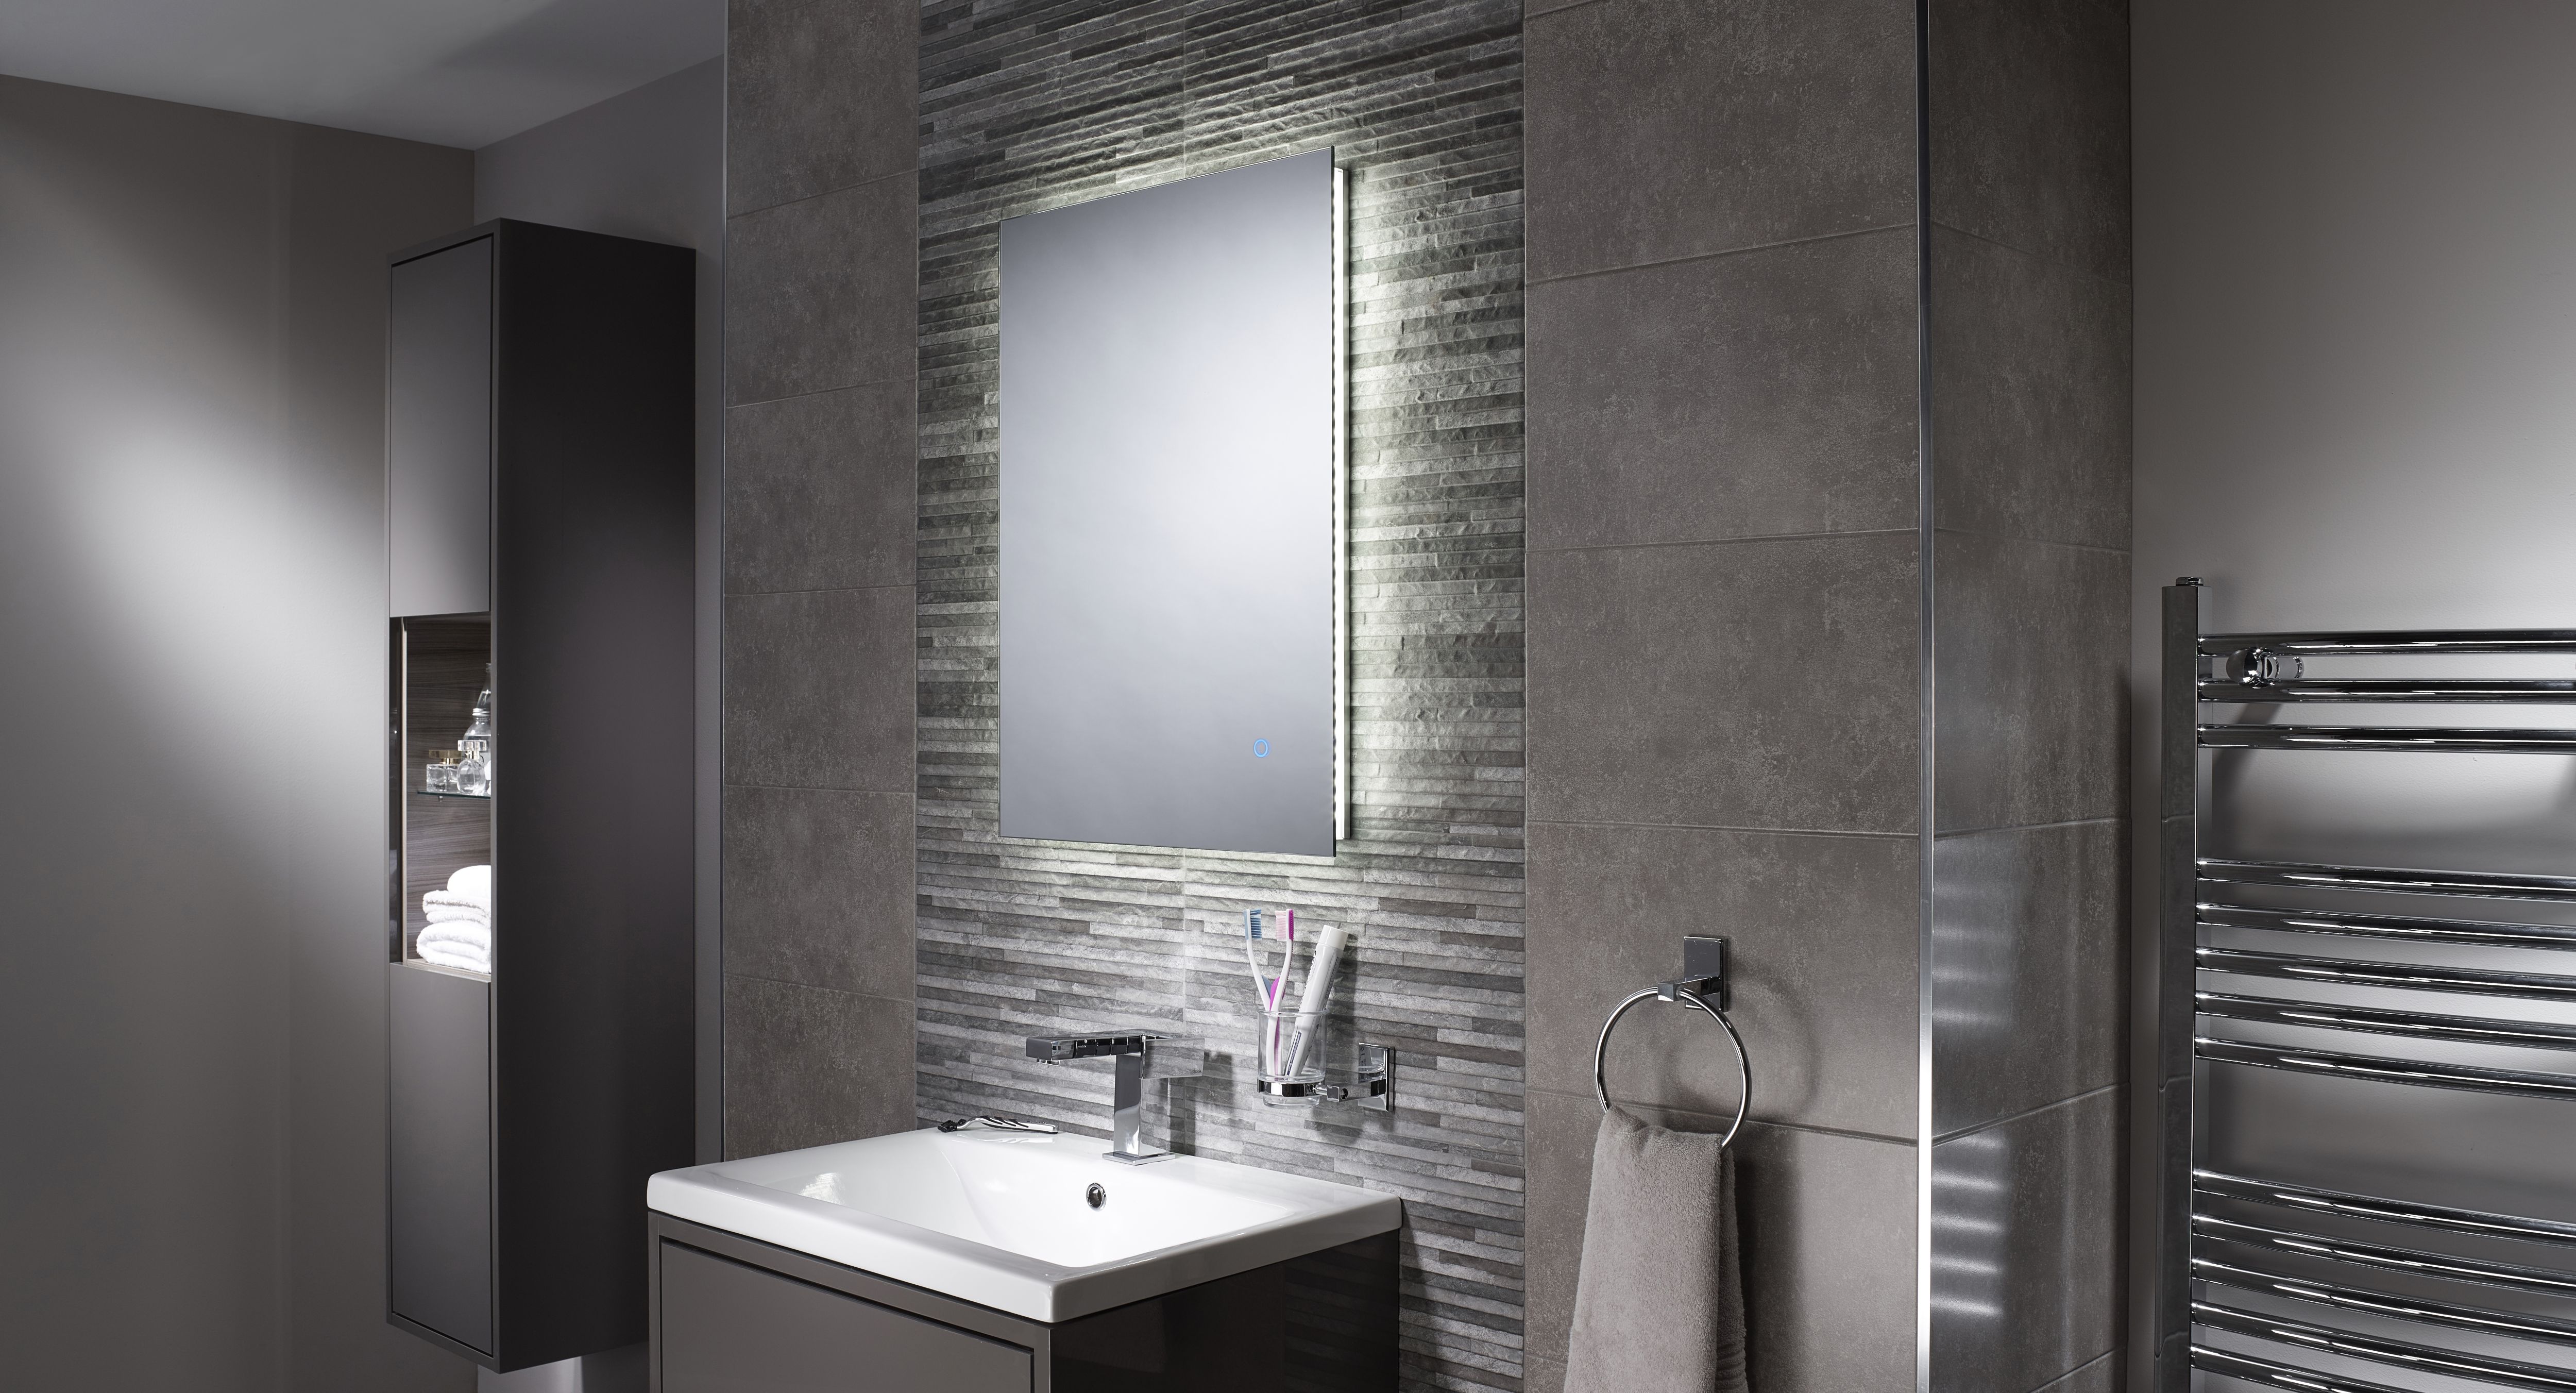 Sensio Serenity Rectangular Wall-mounted Bathroom Illuminated Bathroom mirror (H)70cm (W)50cm